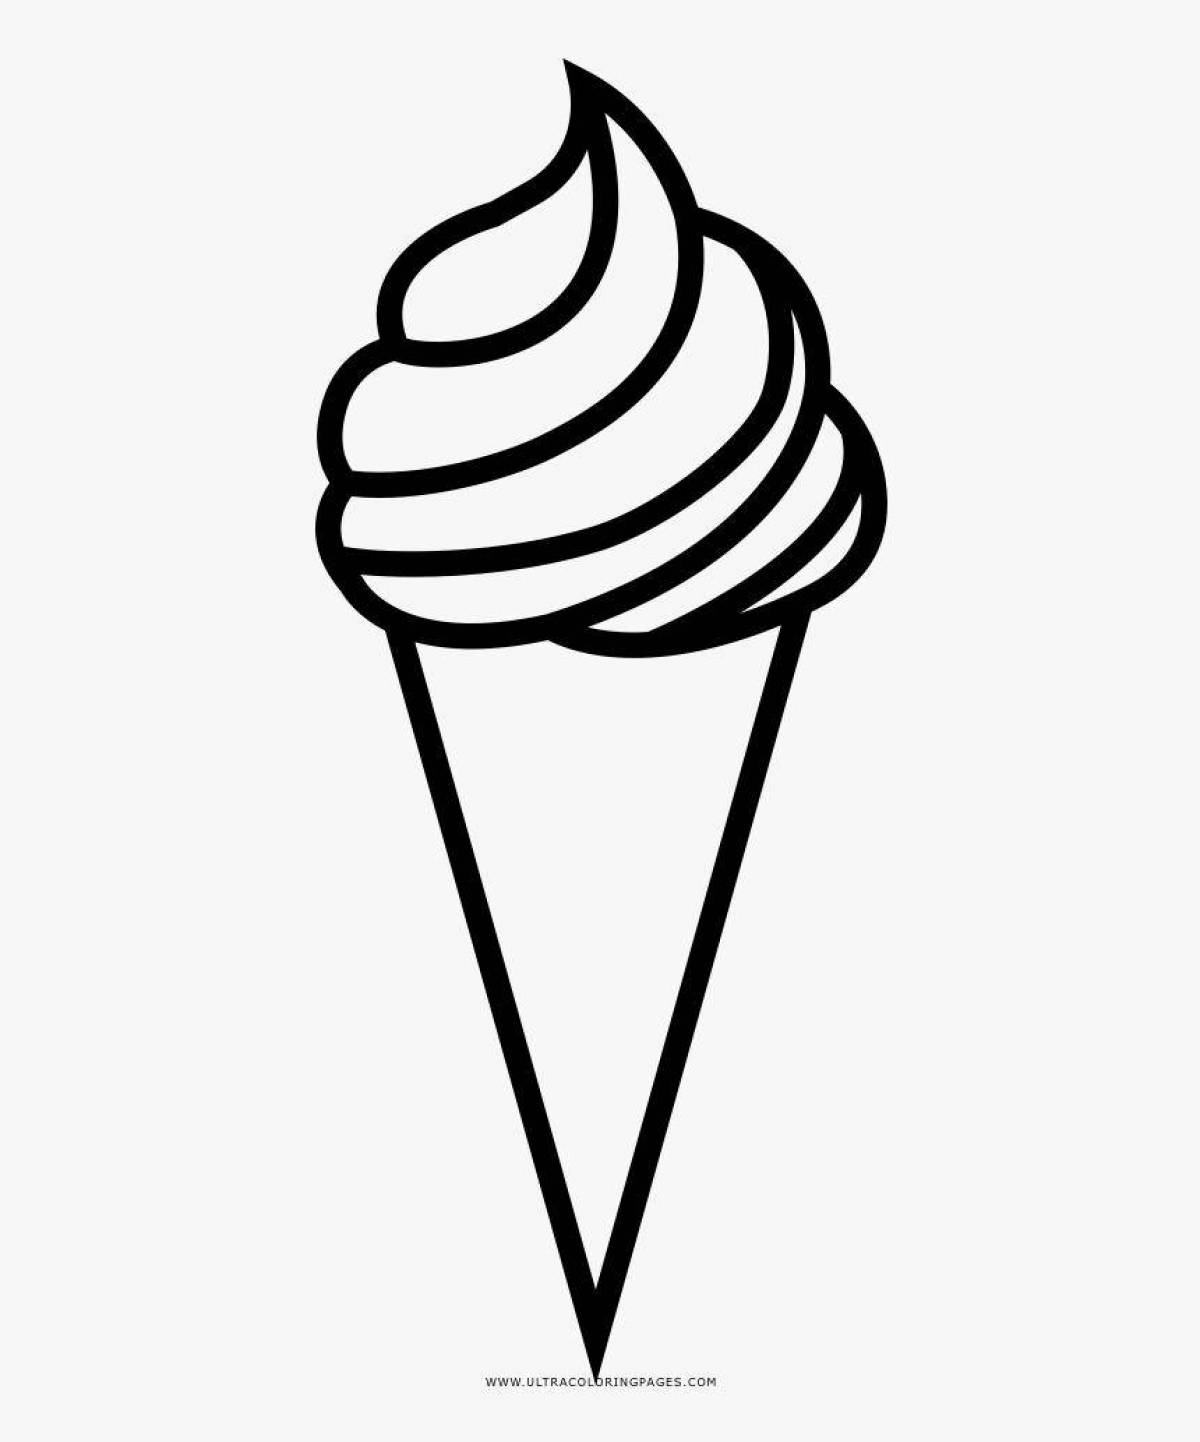 Adorable ice cream cone coloring page